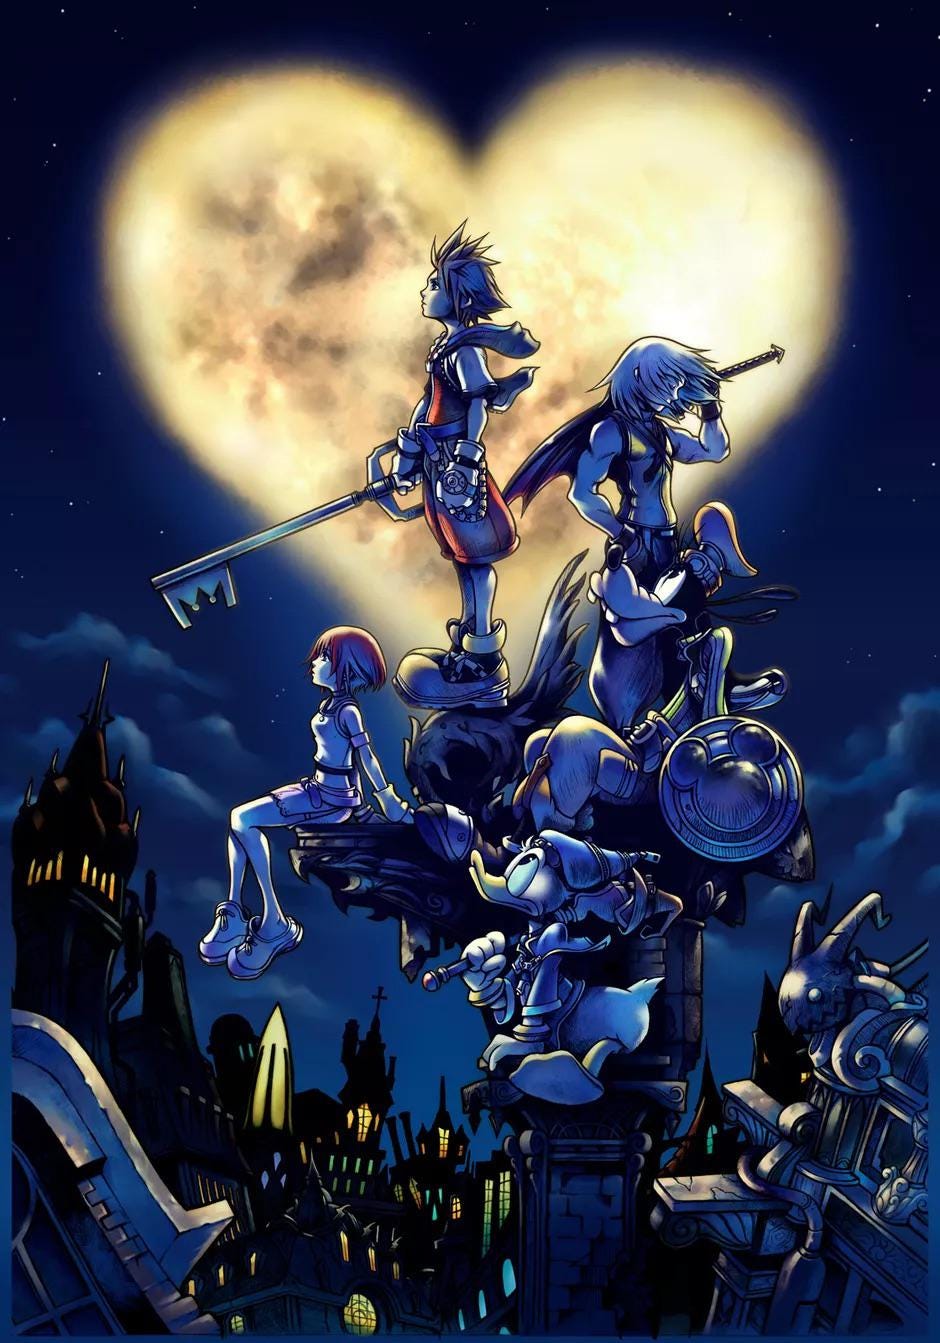 Nomura Art appreciation: Day 1. “Kingdom Hearts 1 cover art ...